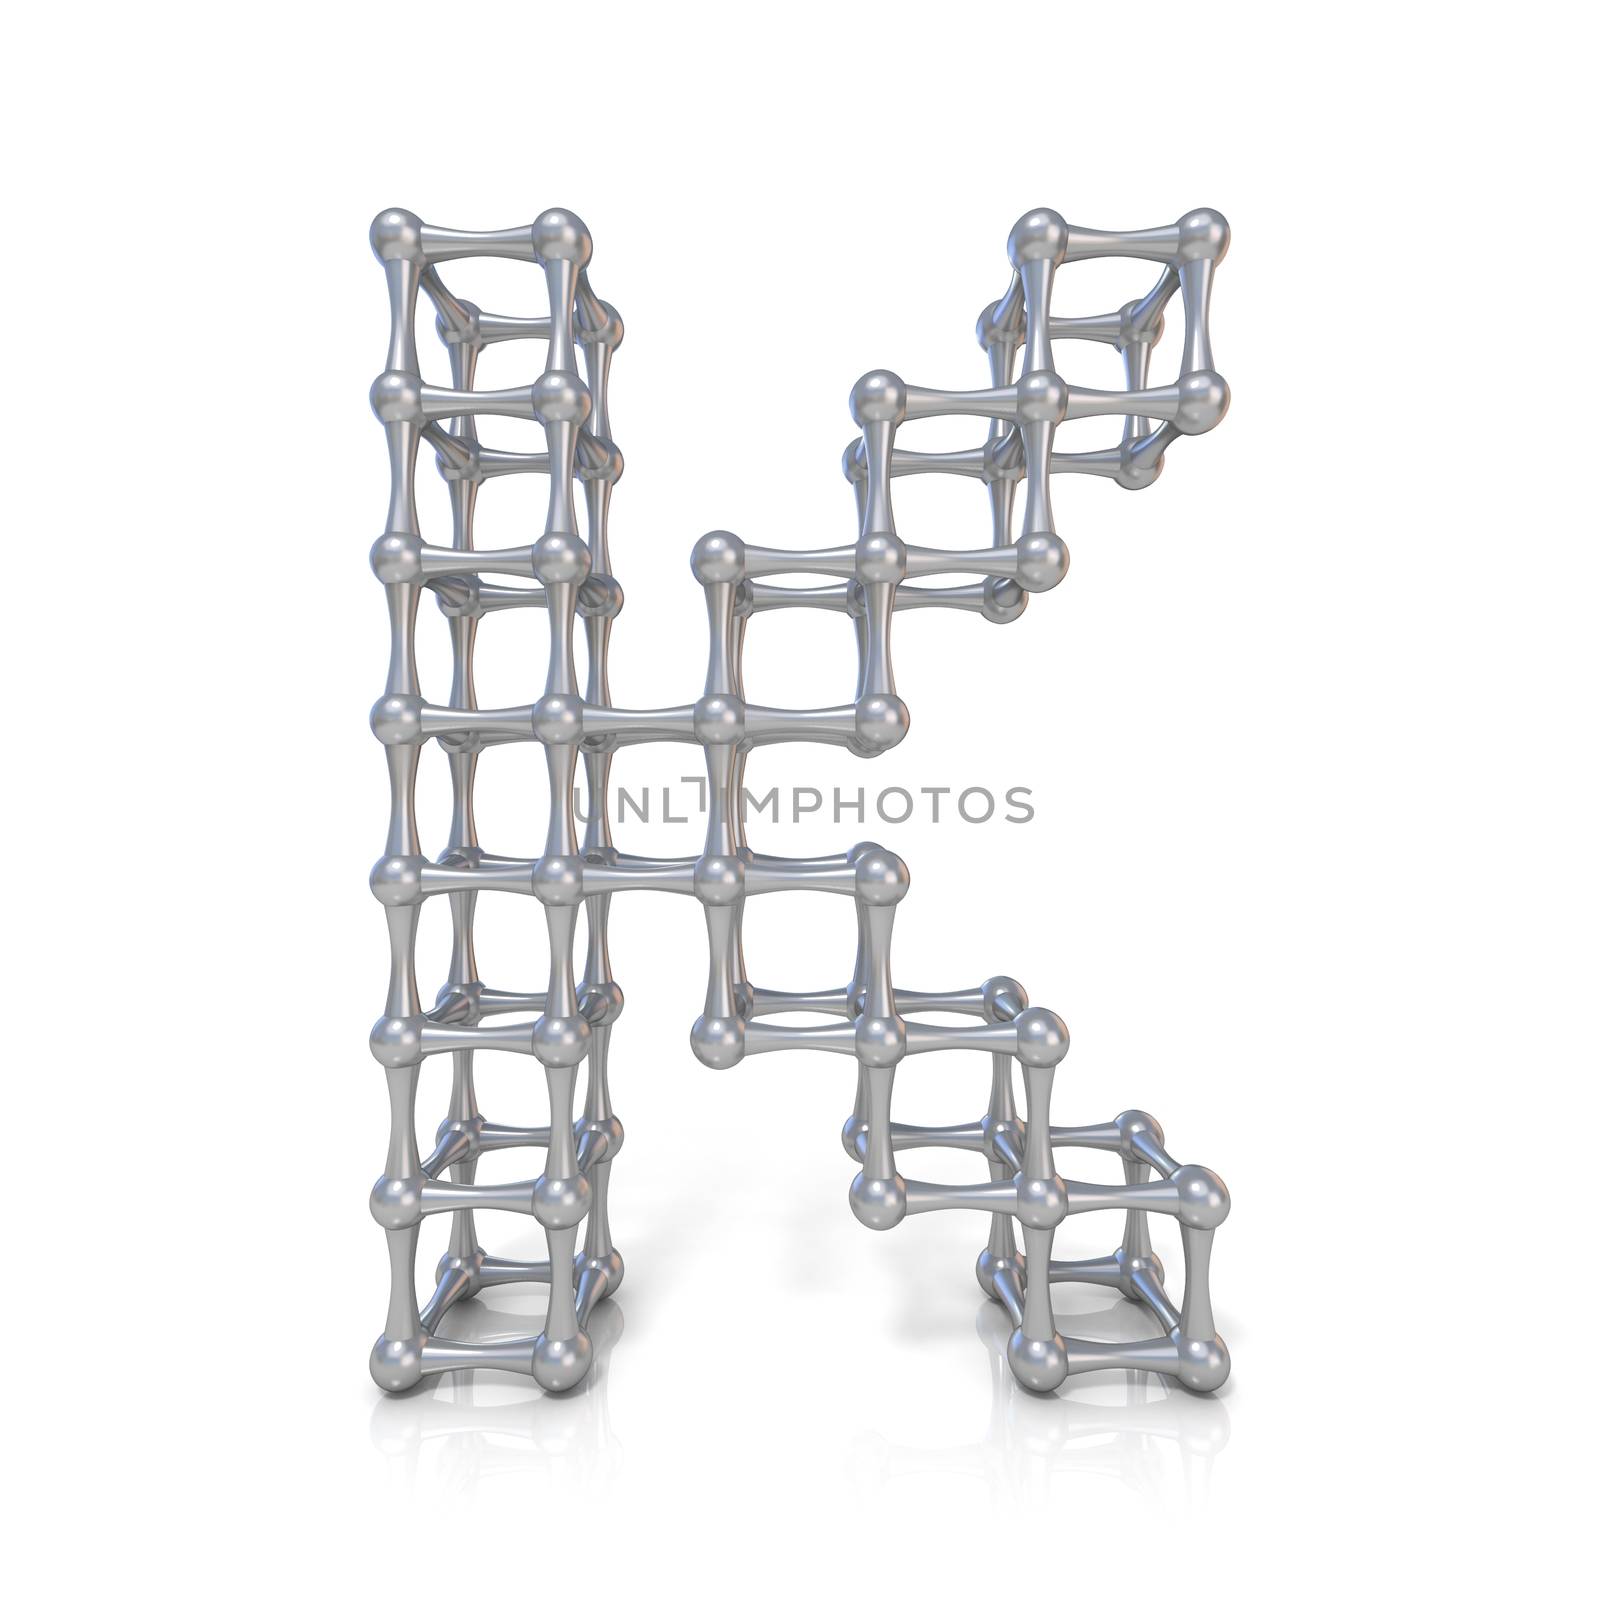 Metal lattice font letter K 3D by djmilic